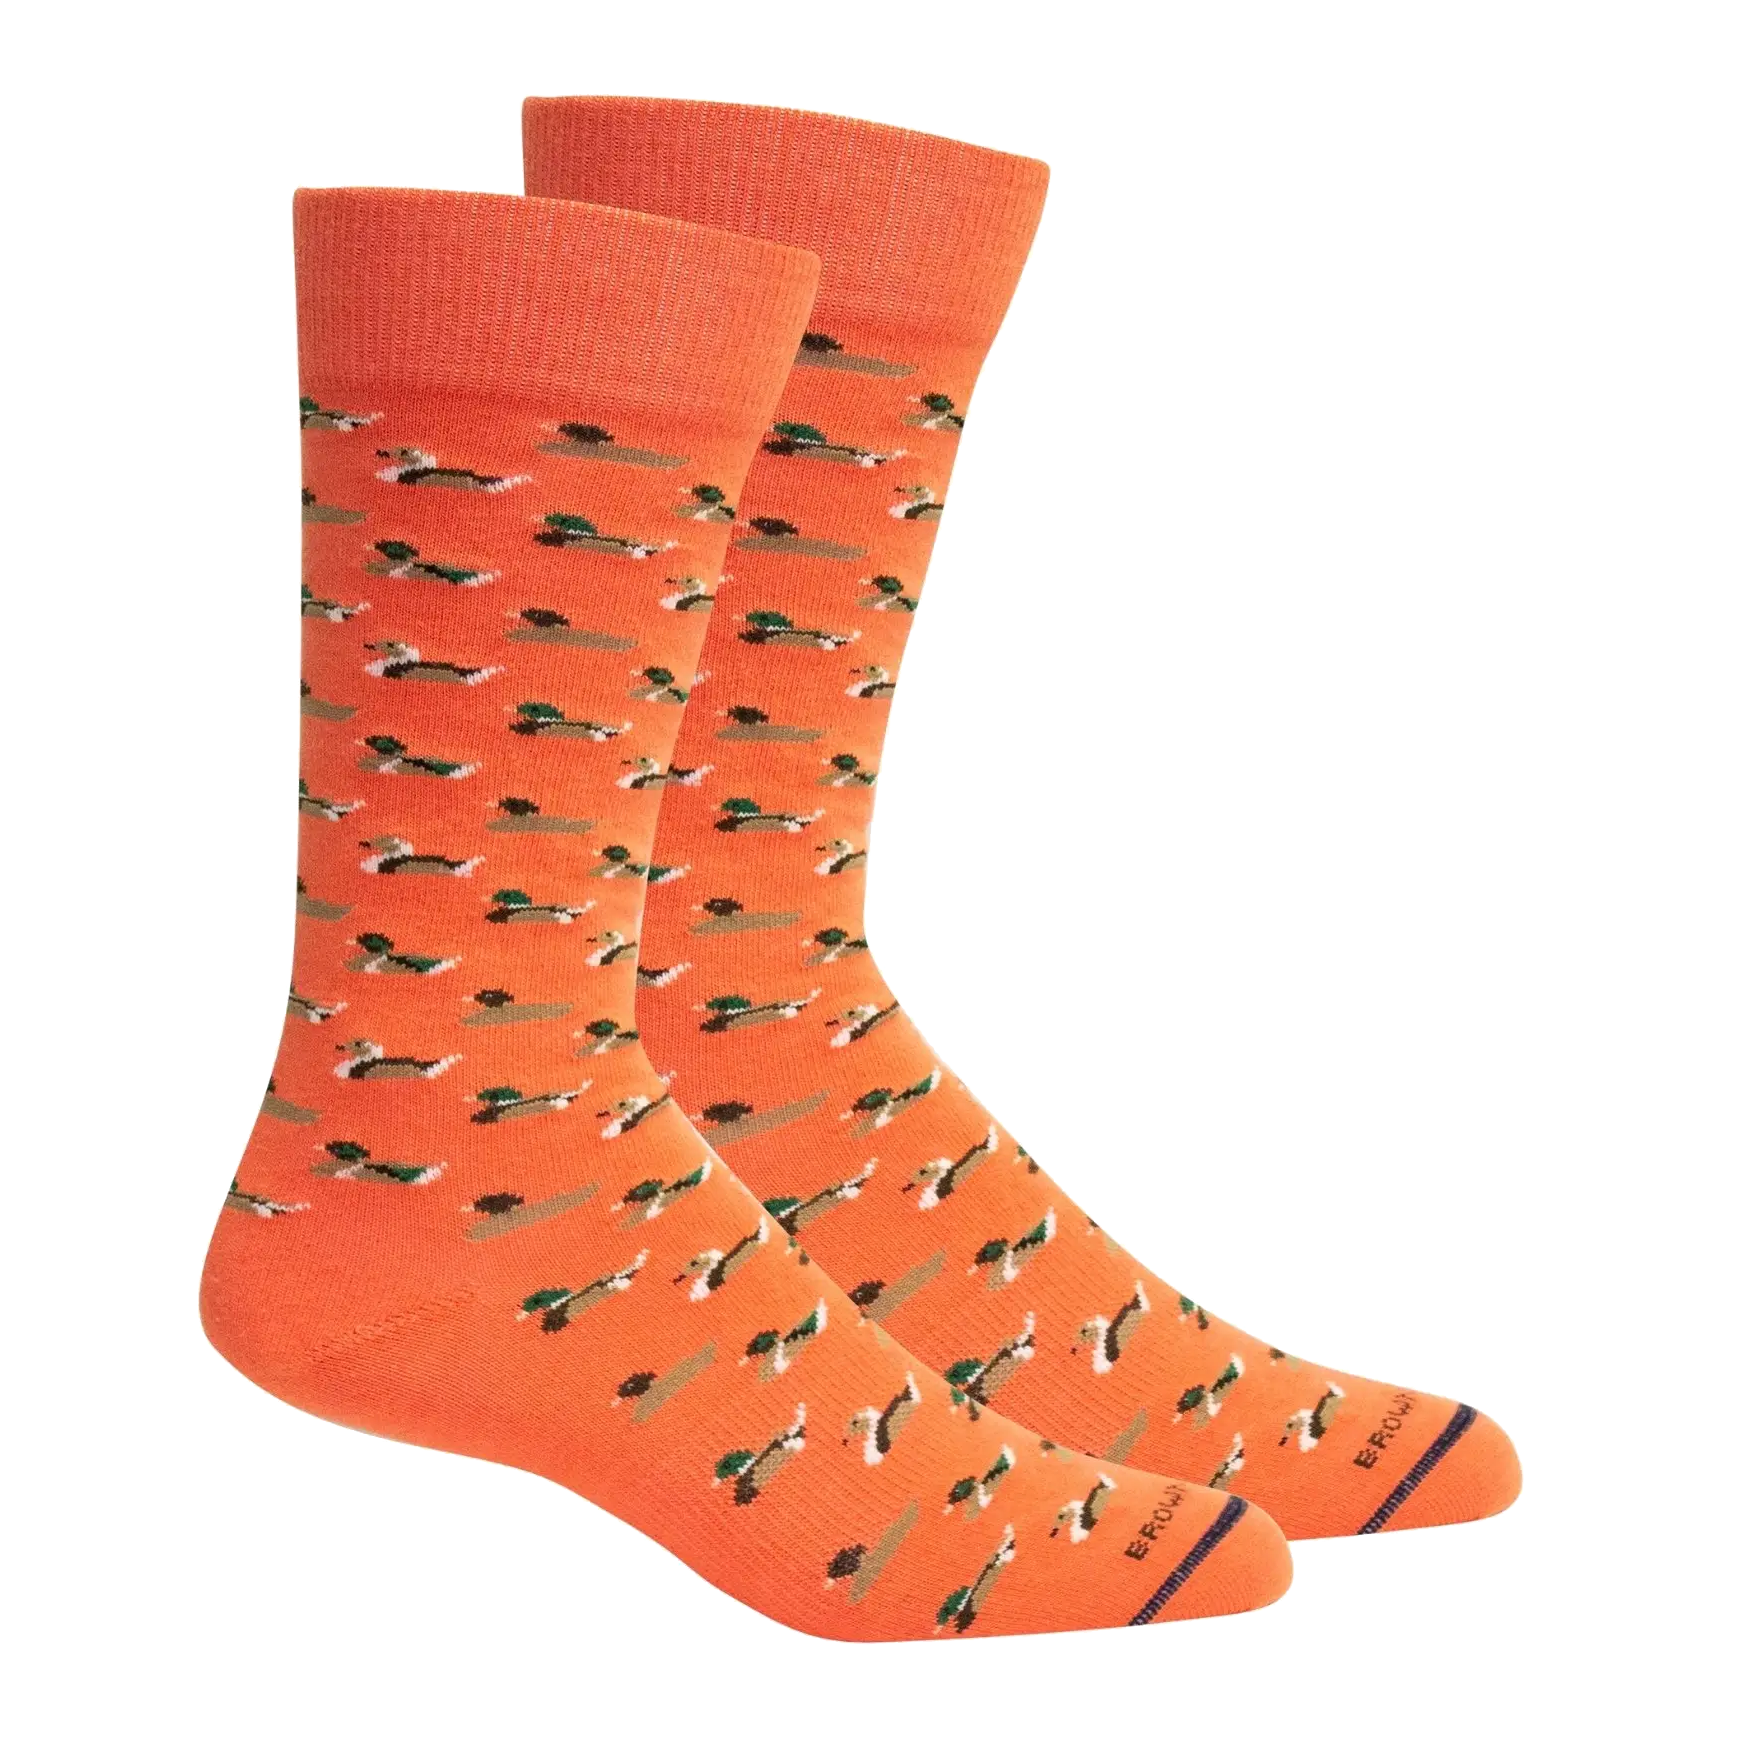 Currituck Socks - Teal - Clemson Sock Shop